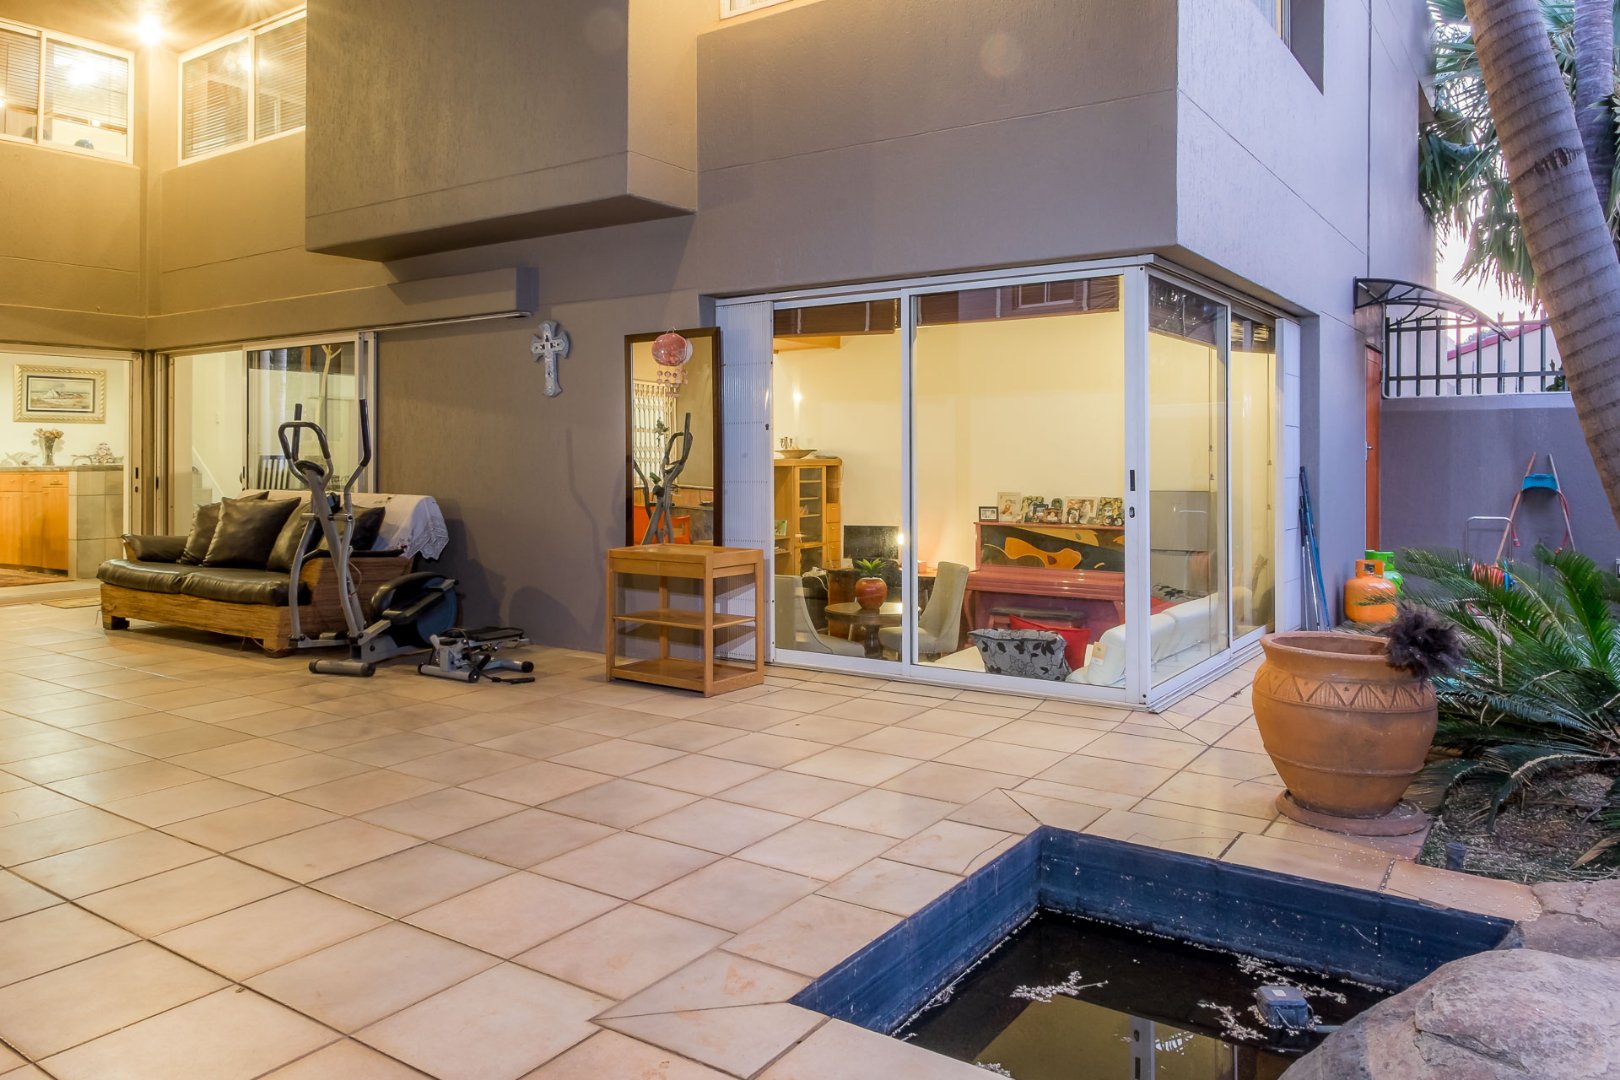 Realty 1 | 3 Bedroom House For Sale In Brummeria, Pretoria